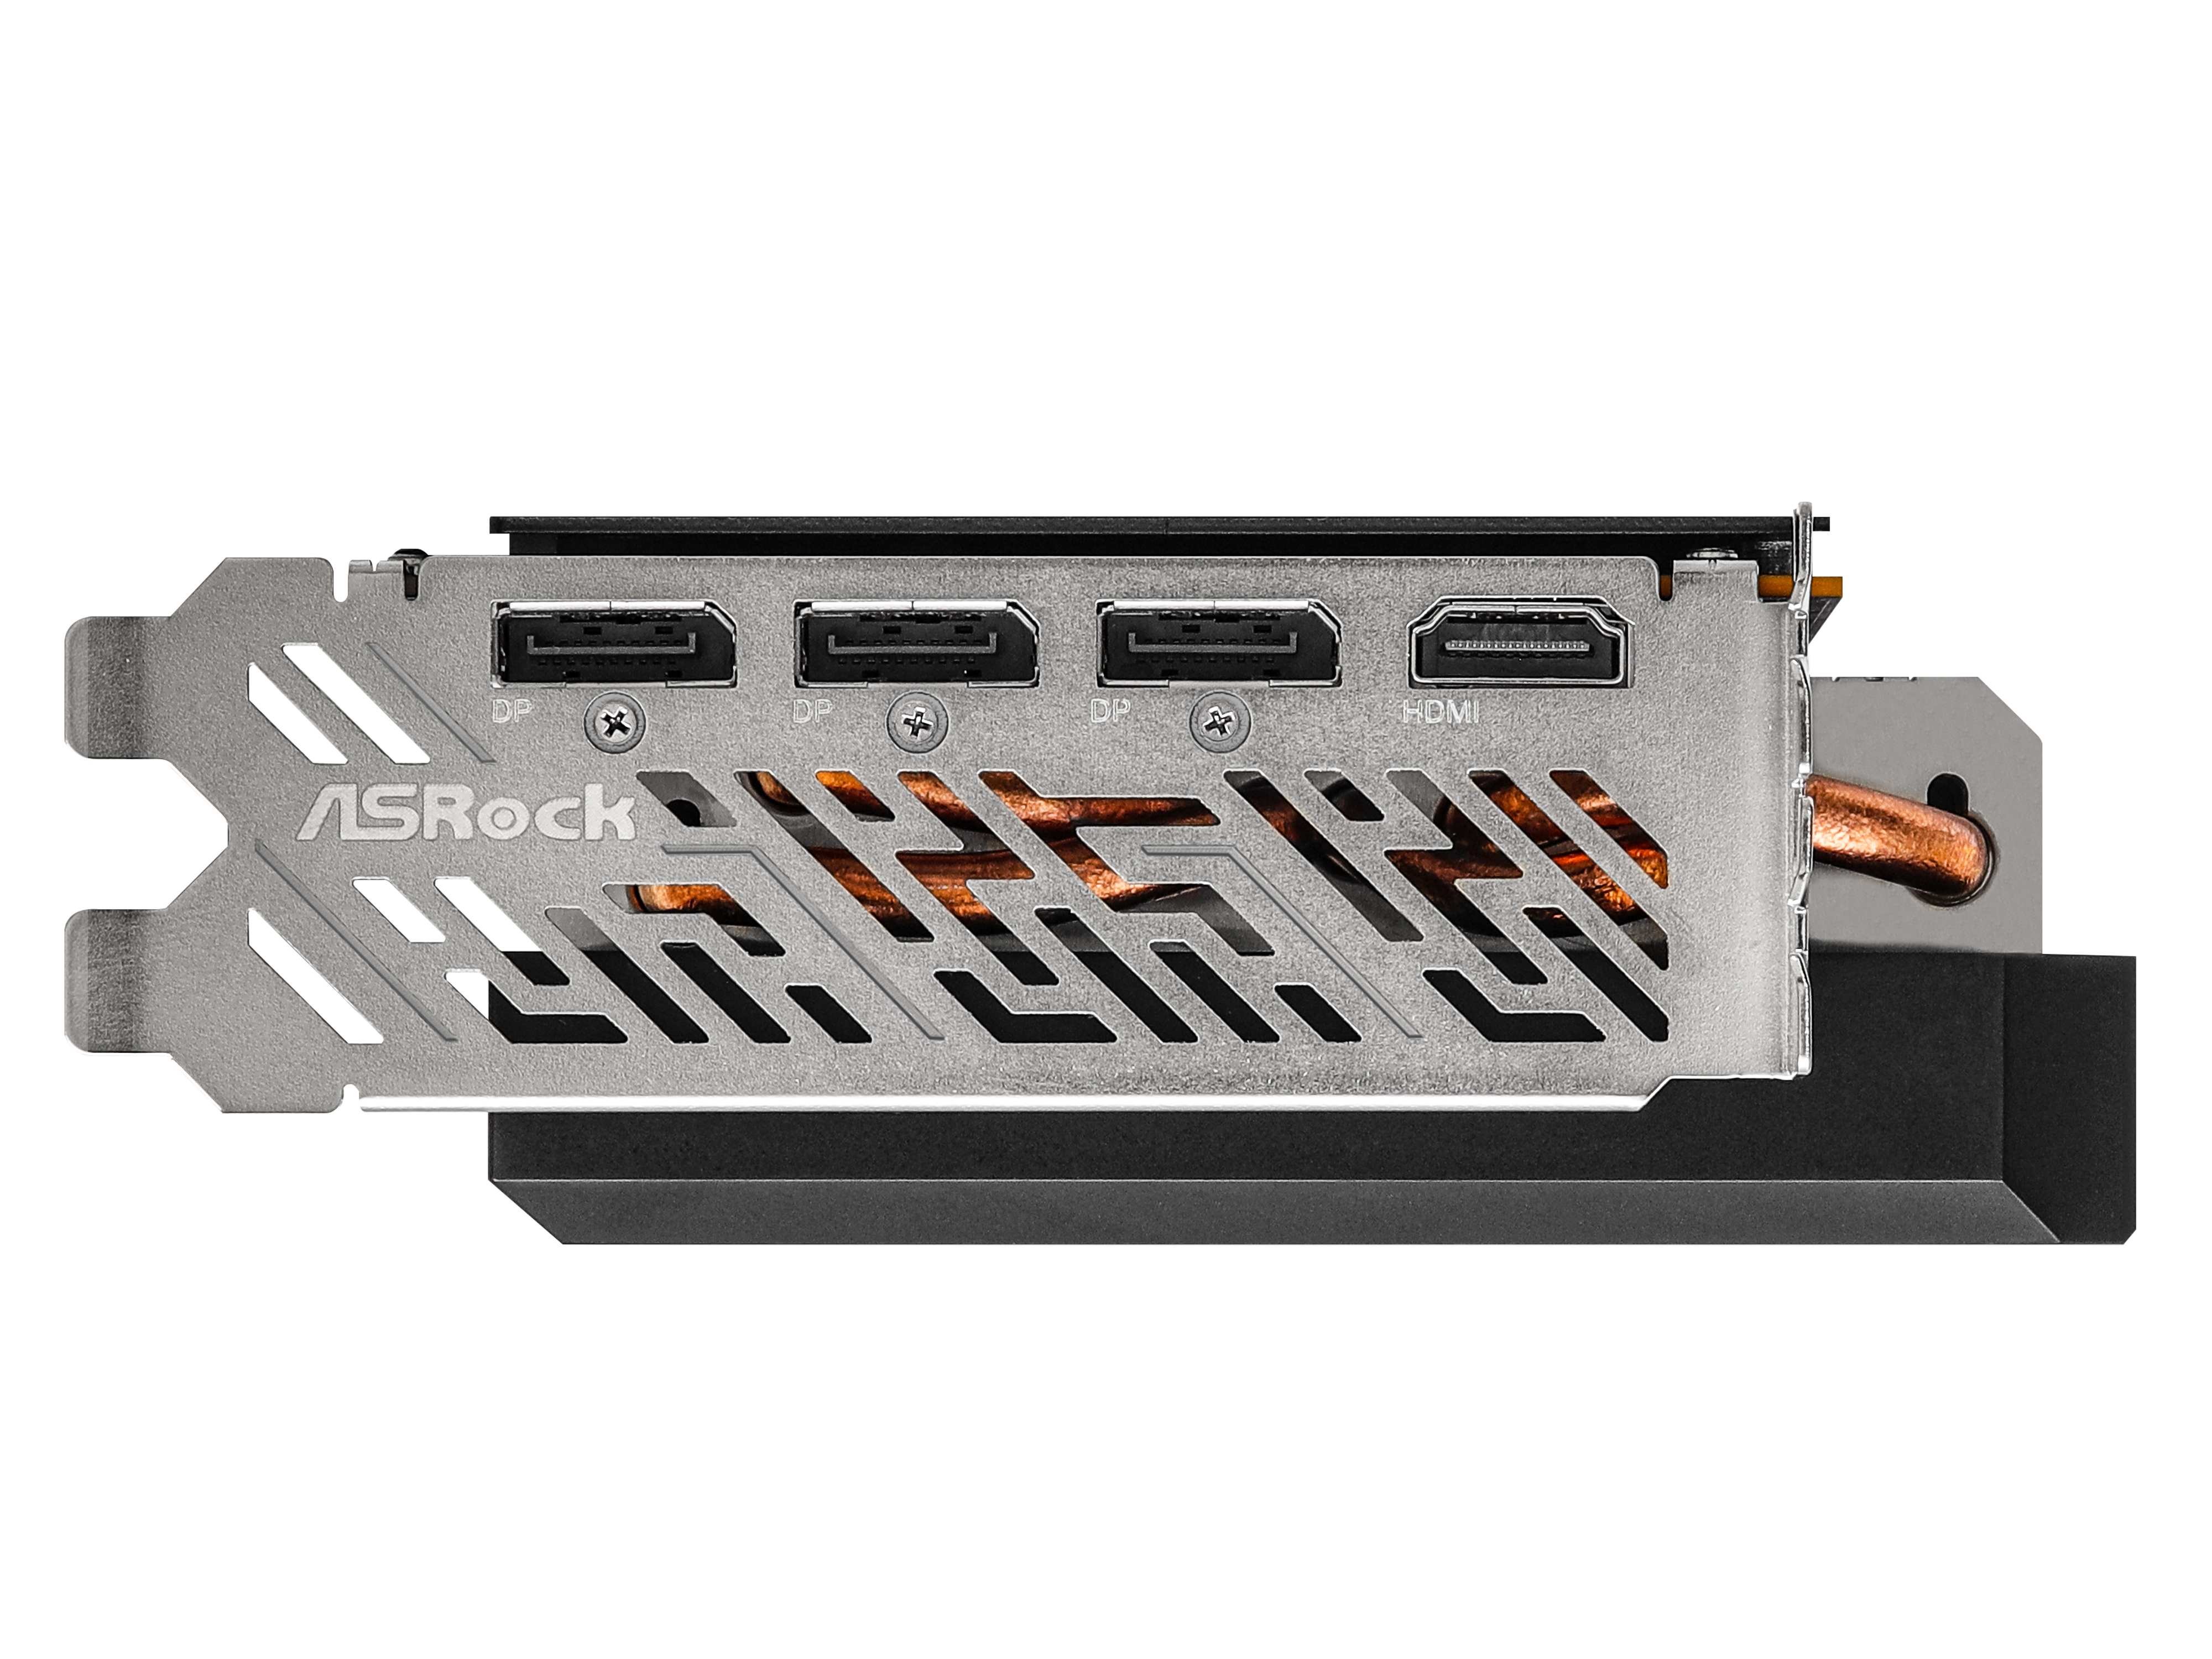 ASRock - Asrock Radeon RX 7900 GRE Challenger Gaming 16GB GDDR6 PCI-Express Graphics Card